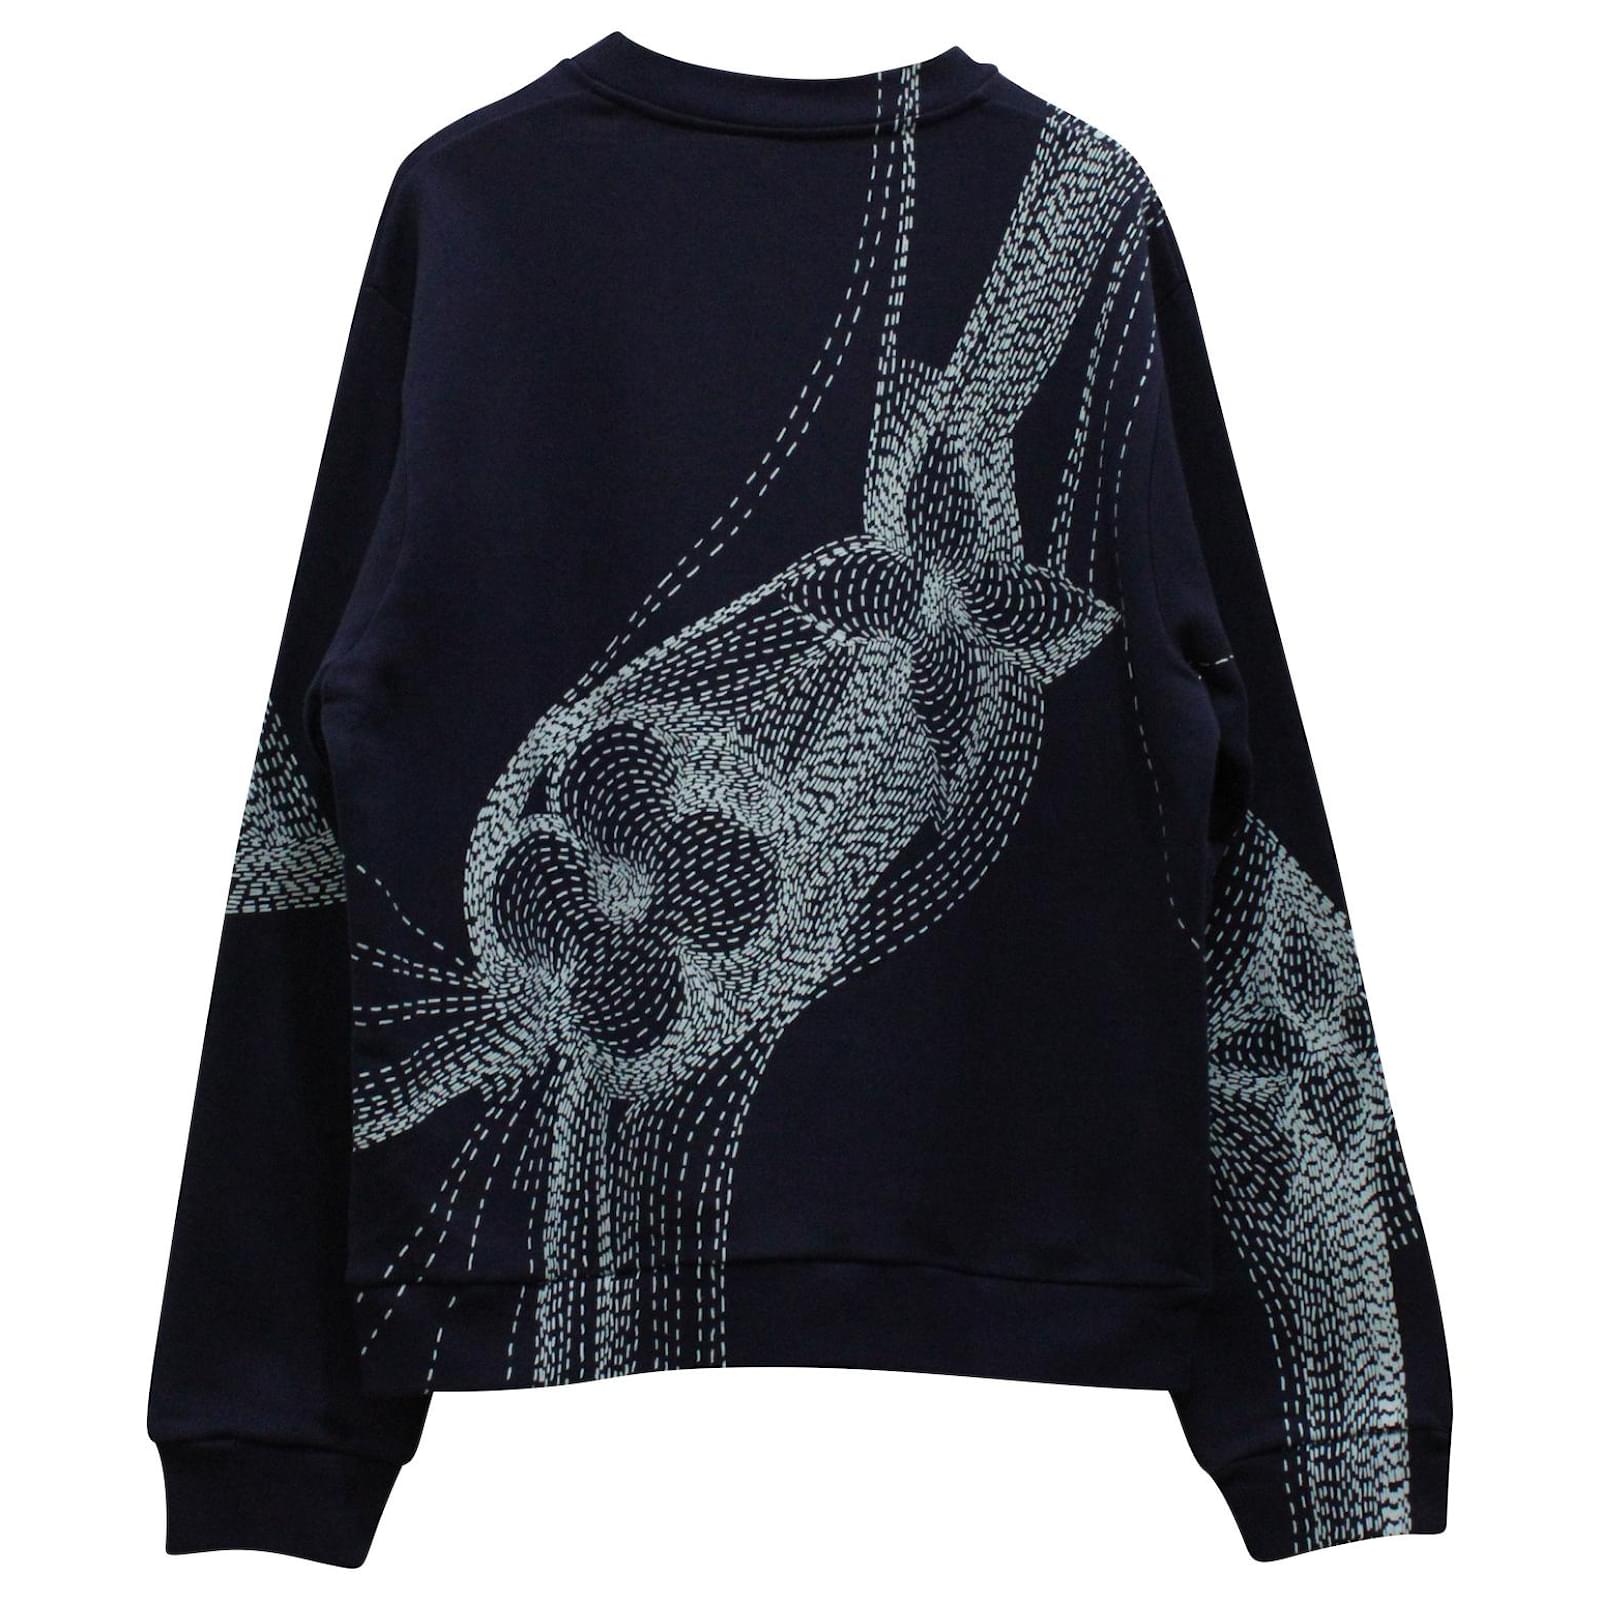 Louis Vuitton, Sweaters, Louis Vuitton Flower Printed Sweatshirt